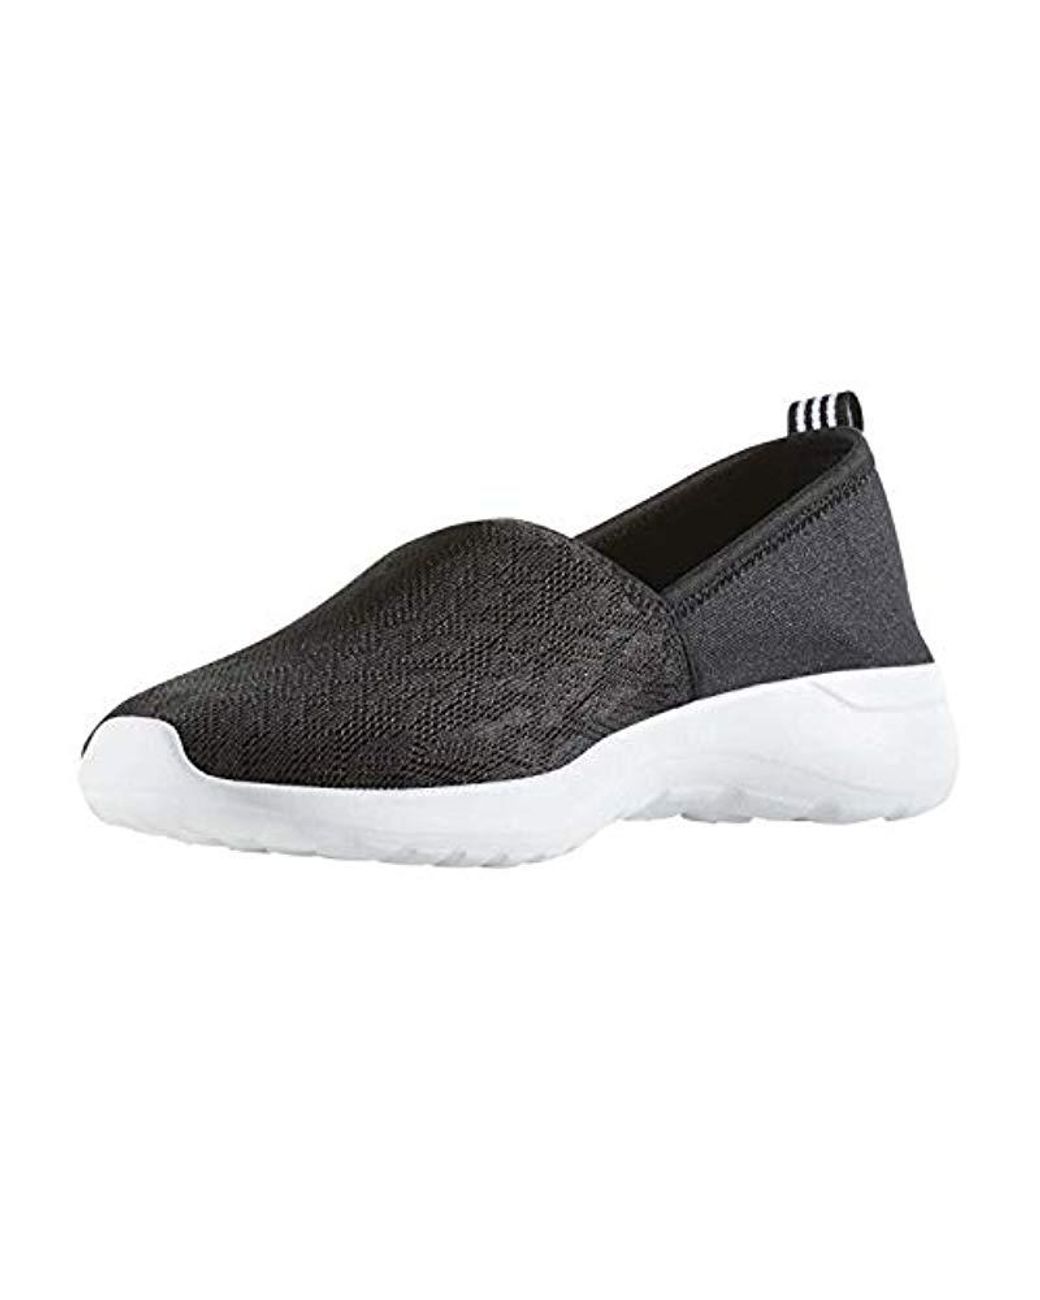 adidas Neo Lite Racer Slip On W Casual Sneaker in Black/White (Black) | Lyst